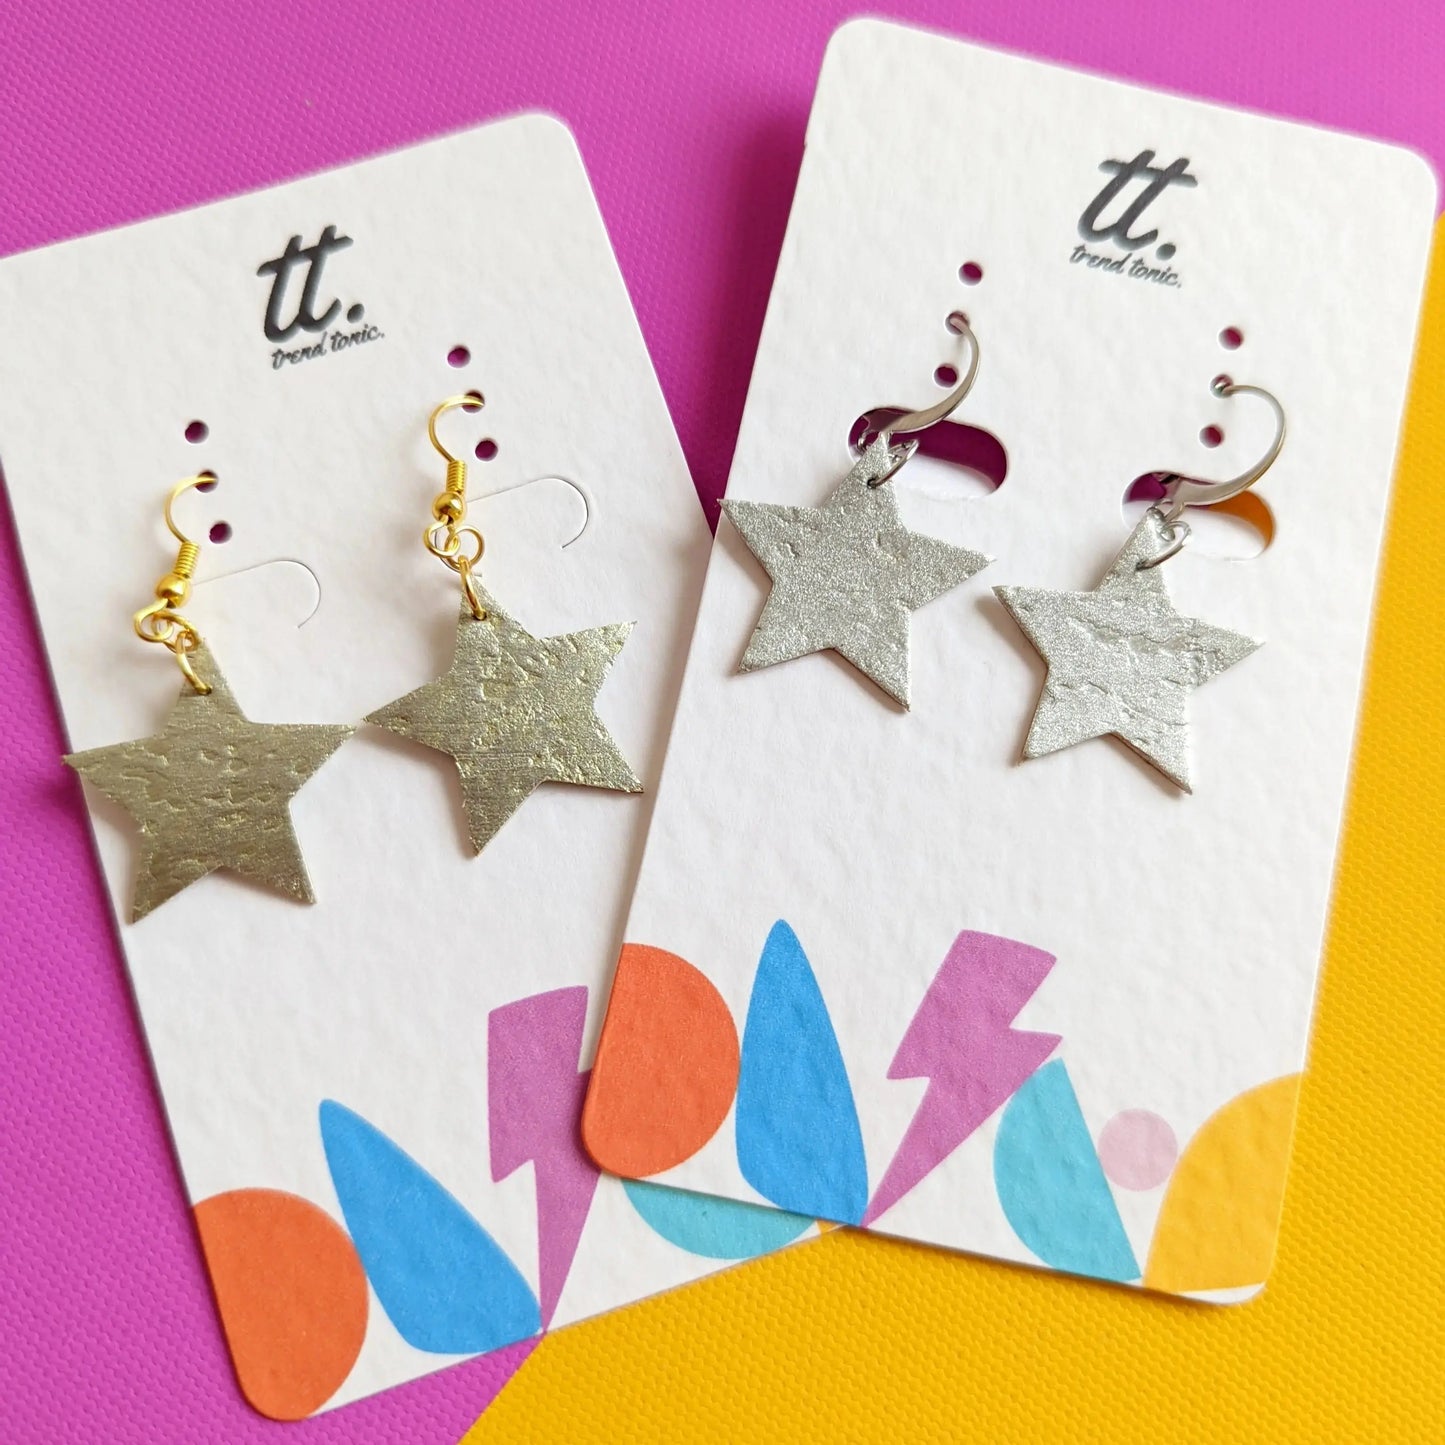 Mini gold cork star earrings - Trend Tonic 